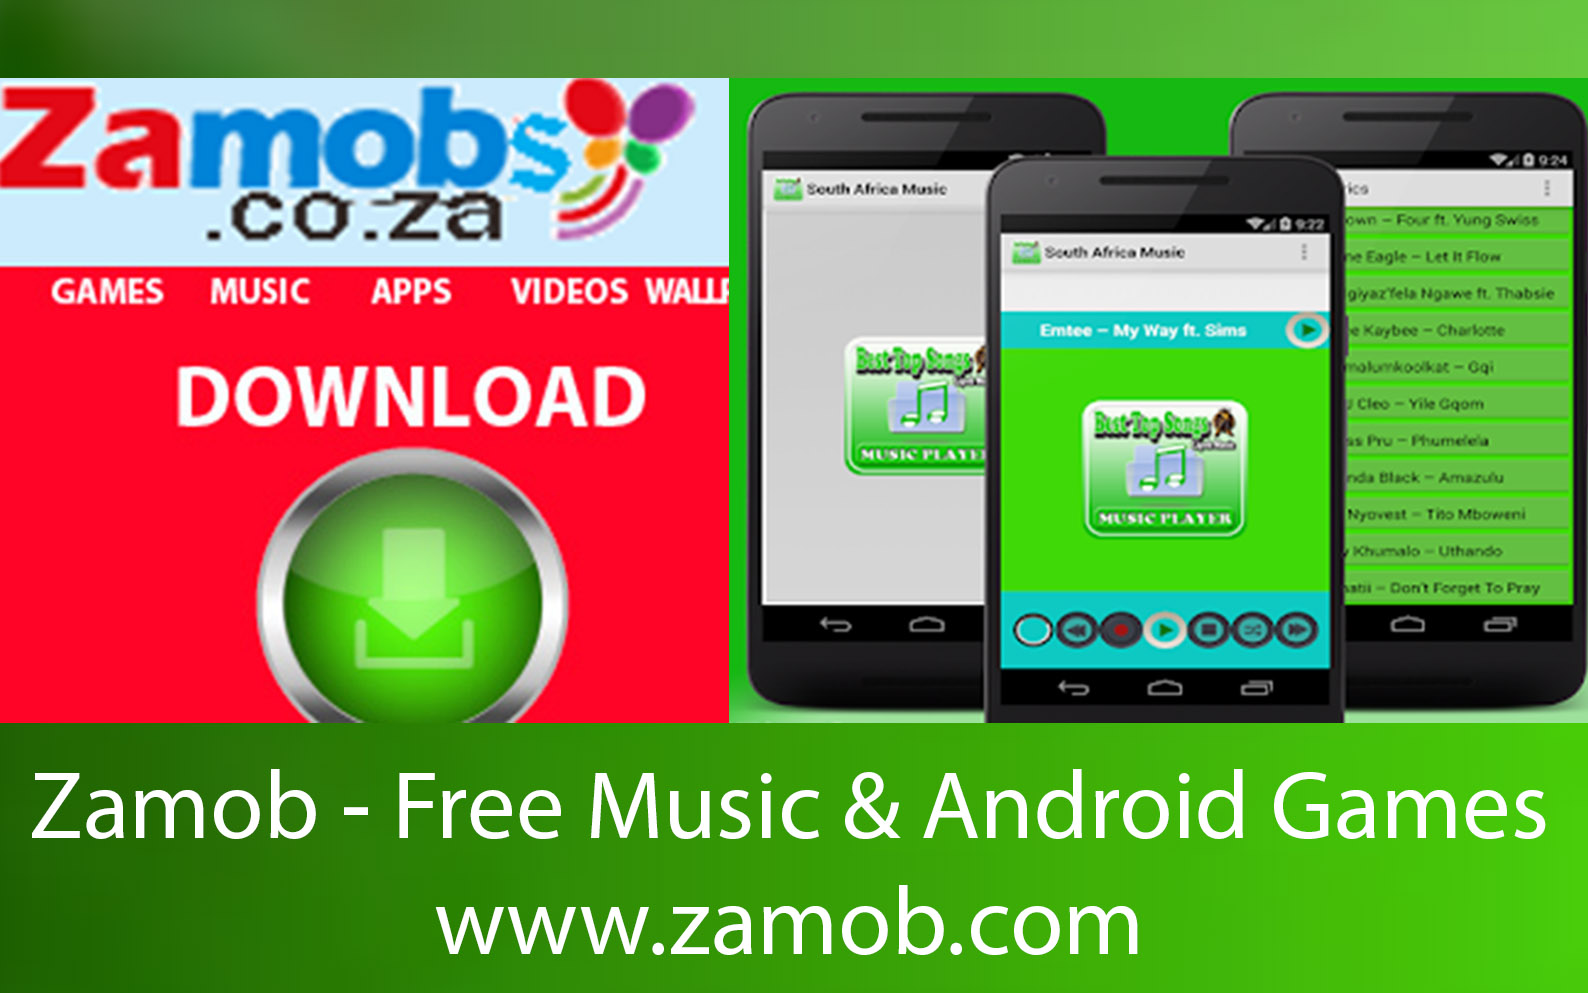 Zamob - Free Music & Android Games | www.zamob.com - TecNg